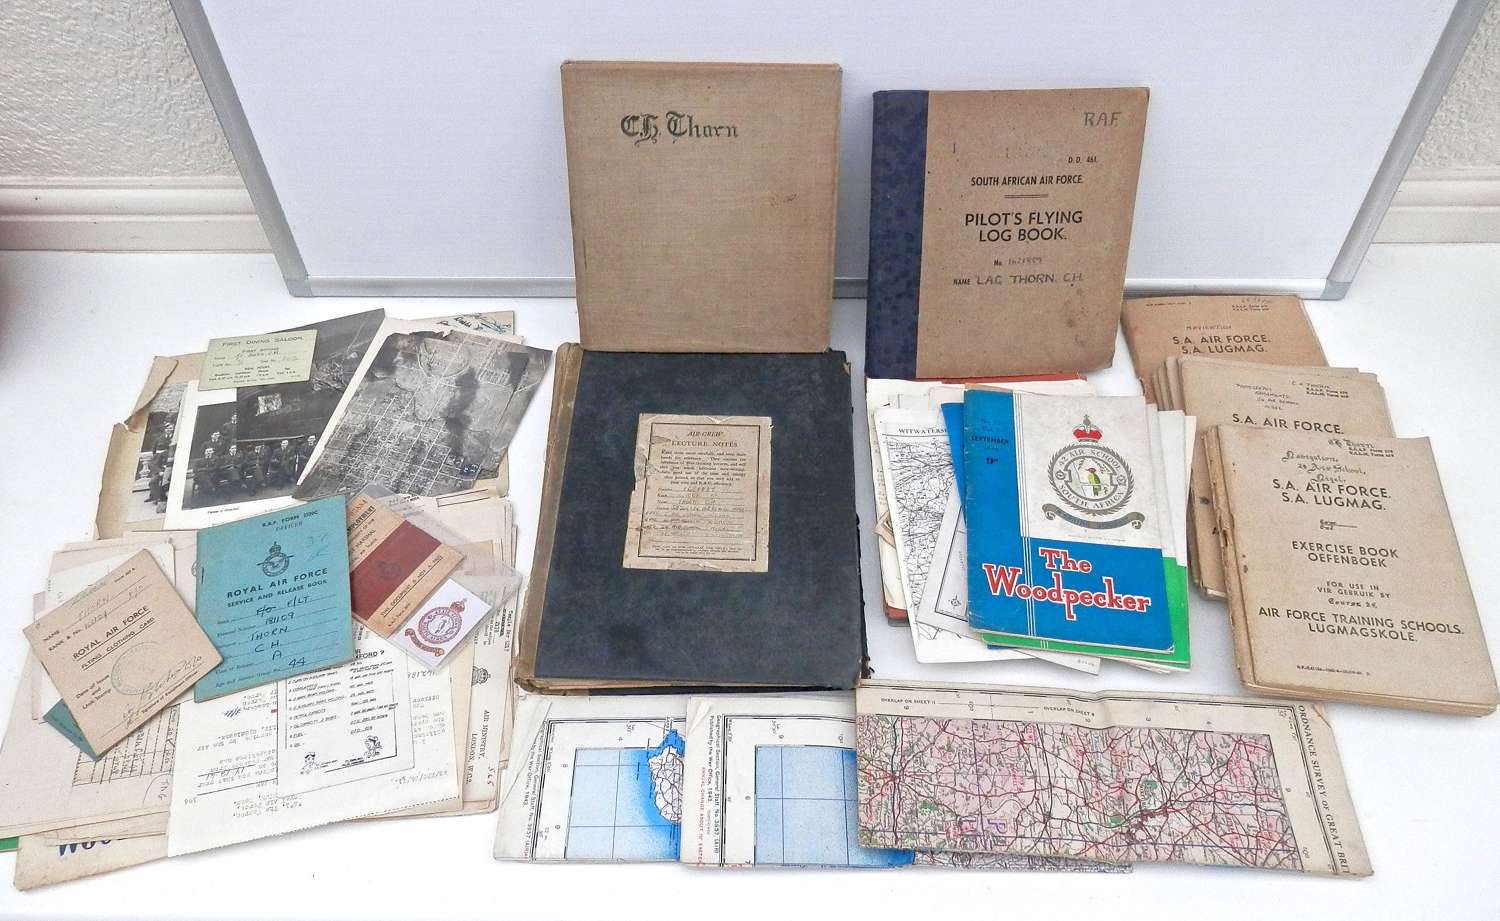 RAF pilots log books and ephemera